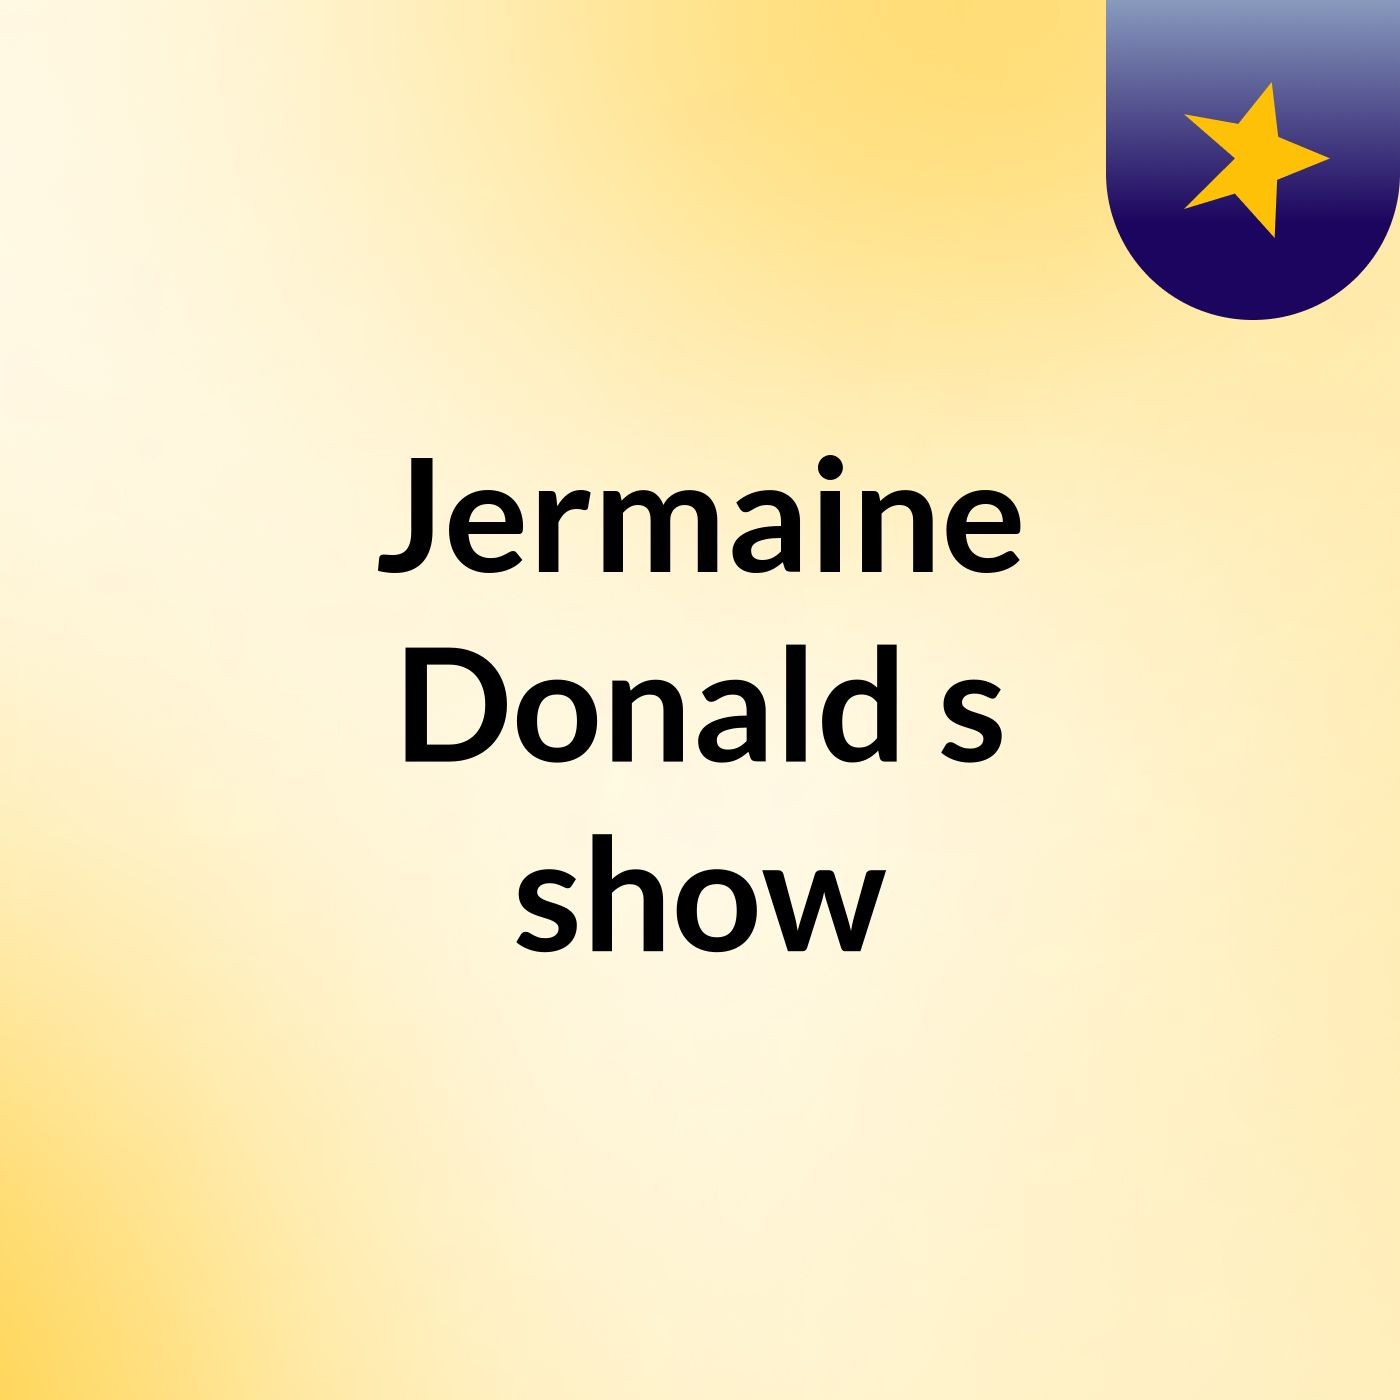 Episode 3 - Jermaine Donald's show